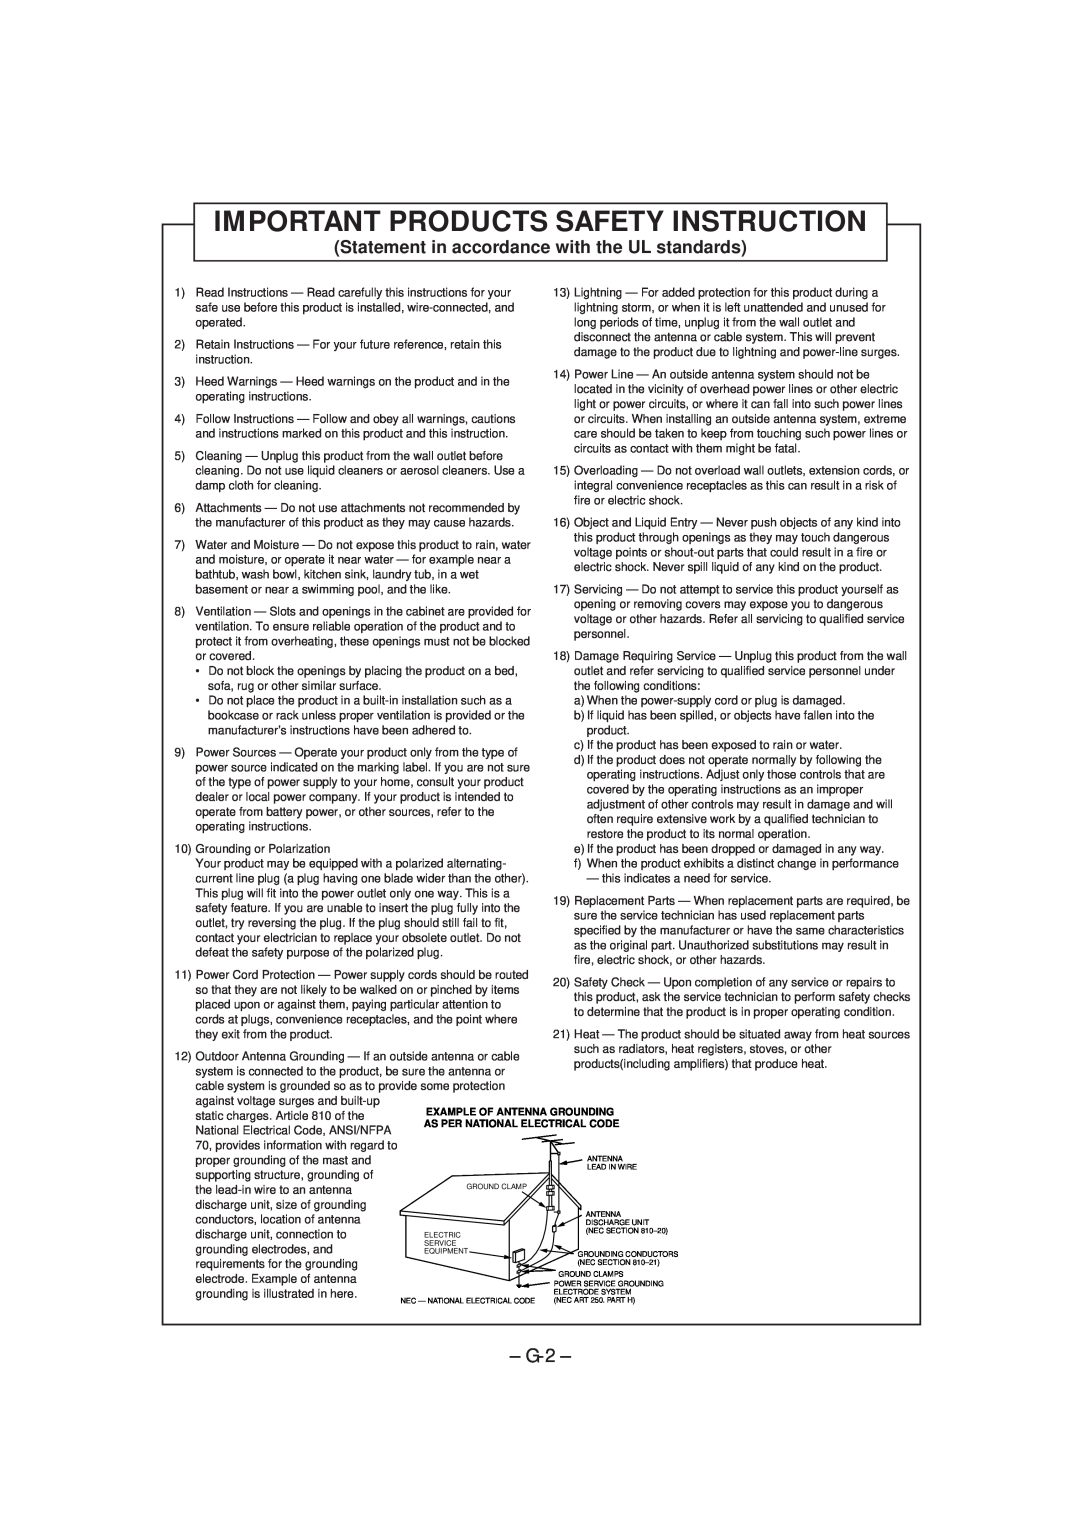 JVC MX-DVA9 manual G-2, Important Products Safety Instruction 